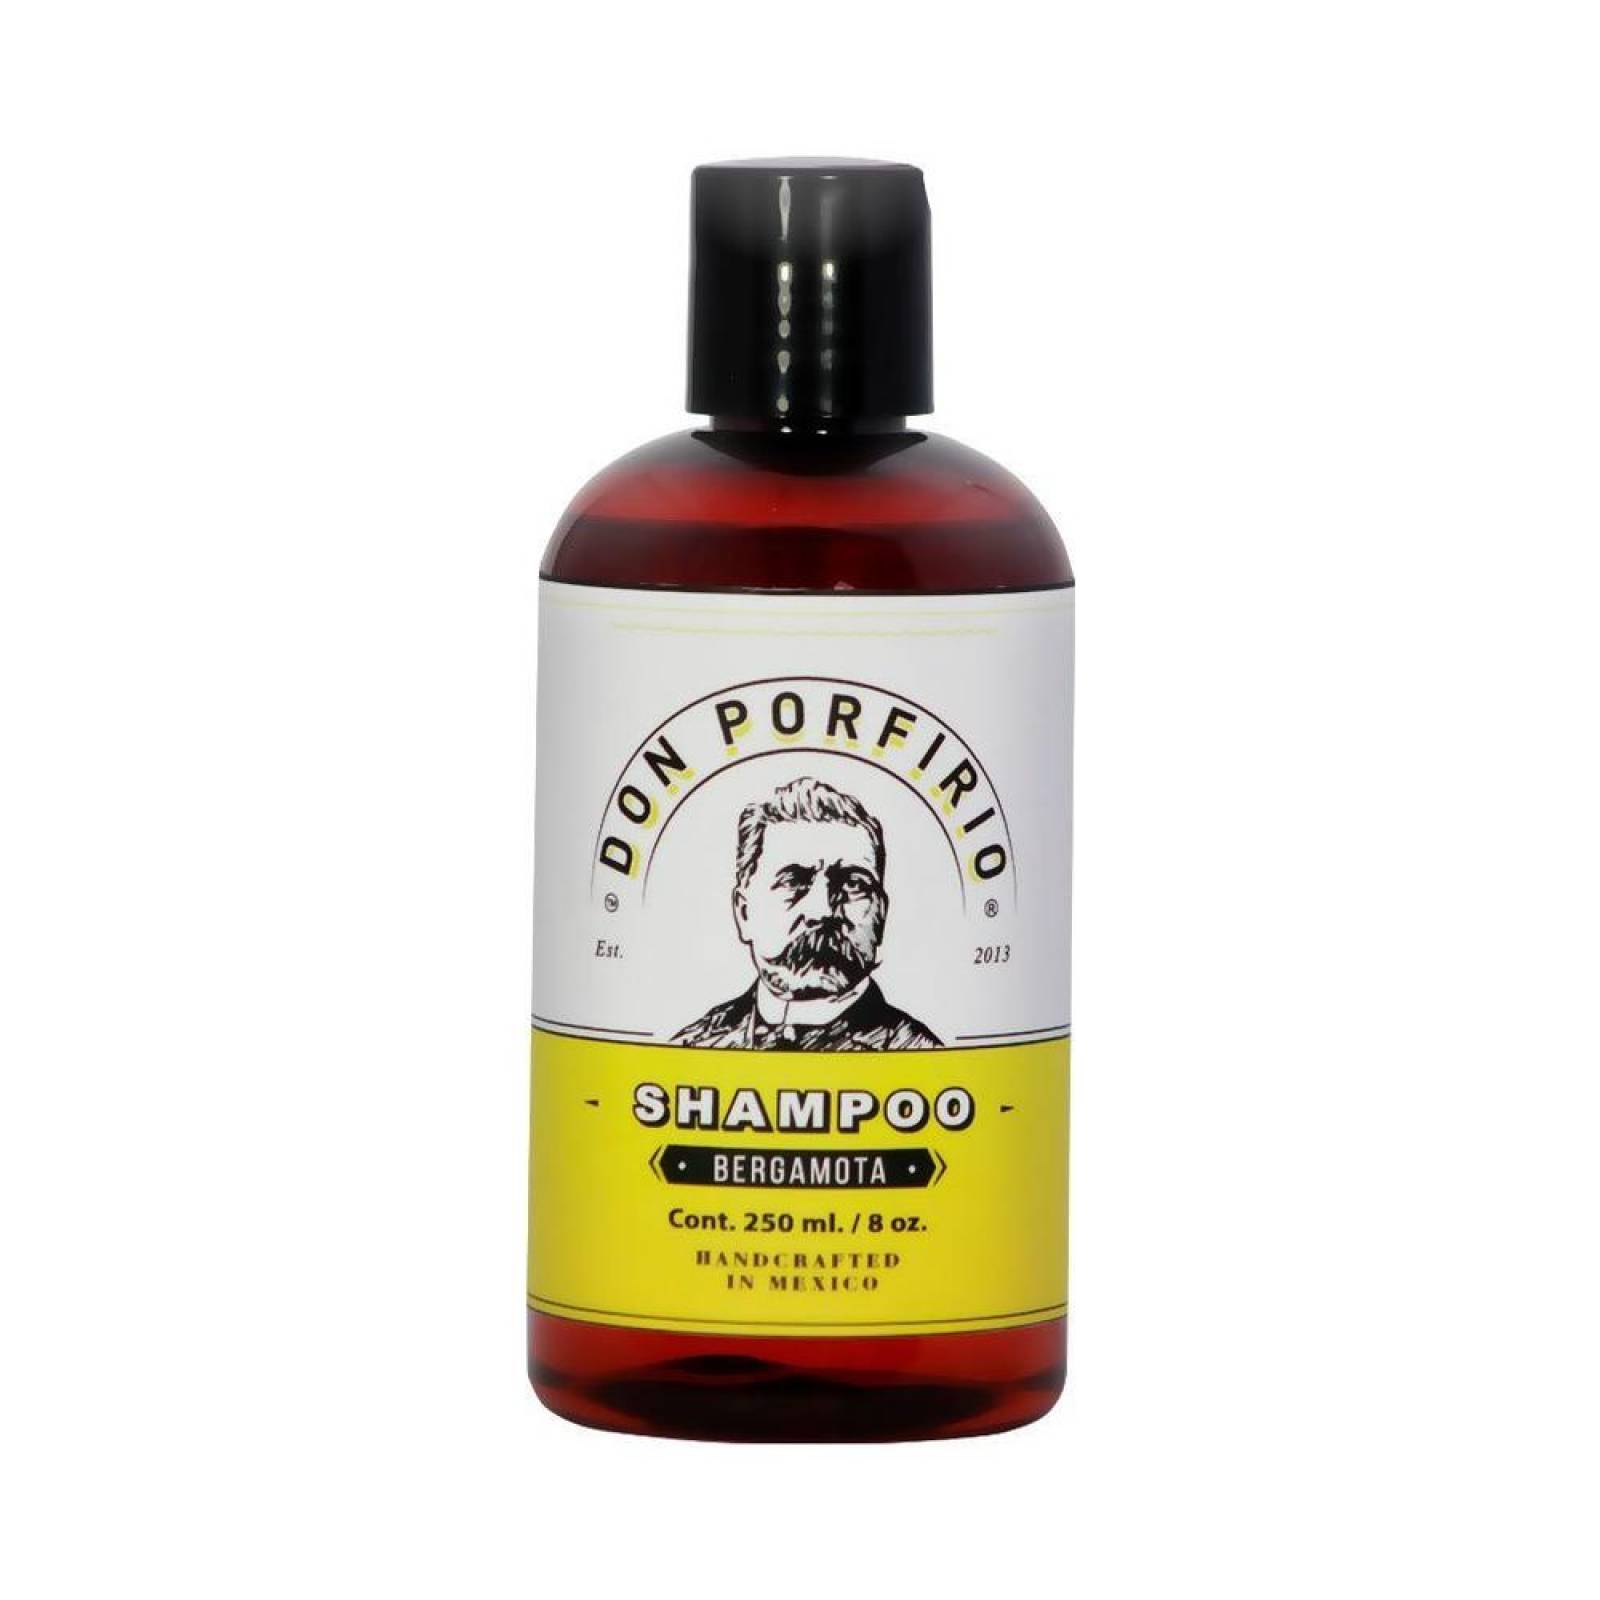 Don Porfirio - Shampoo para Barba Bergamota 250ml 